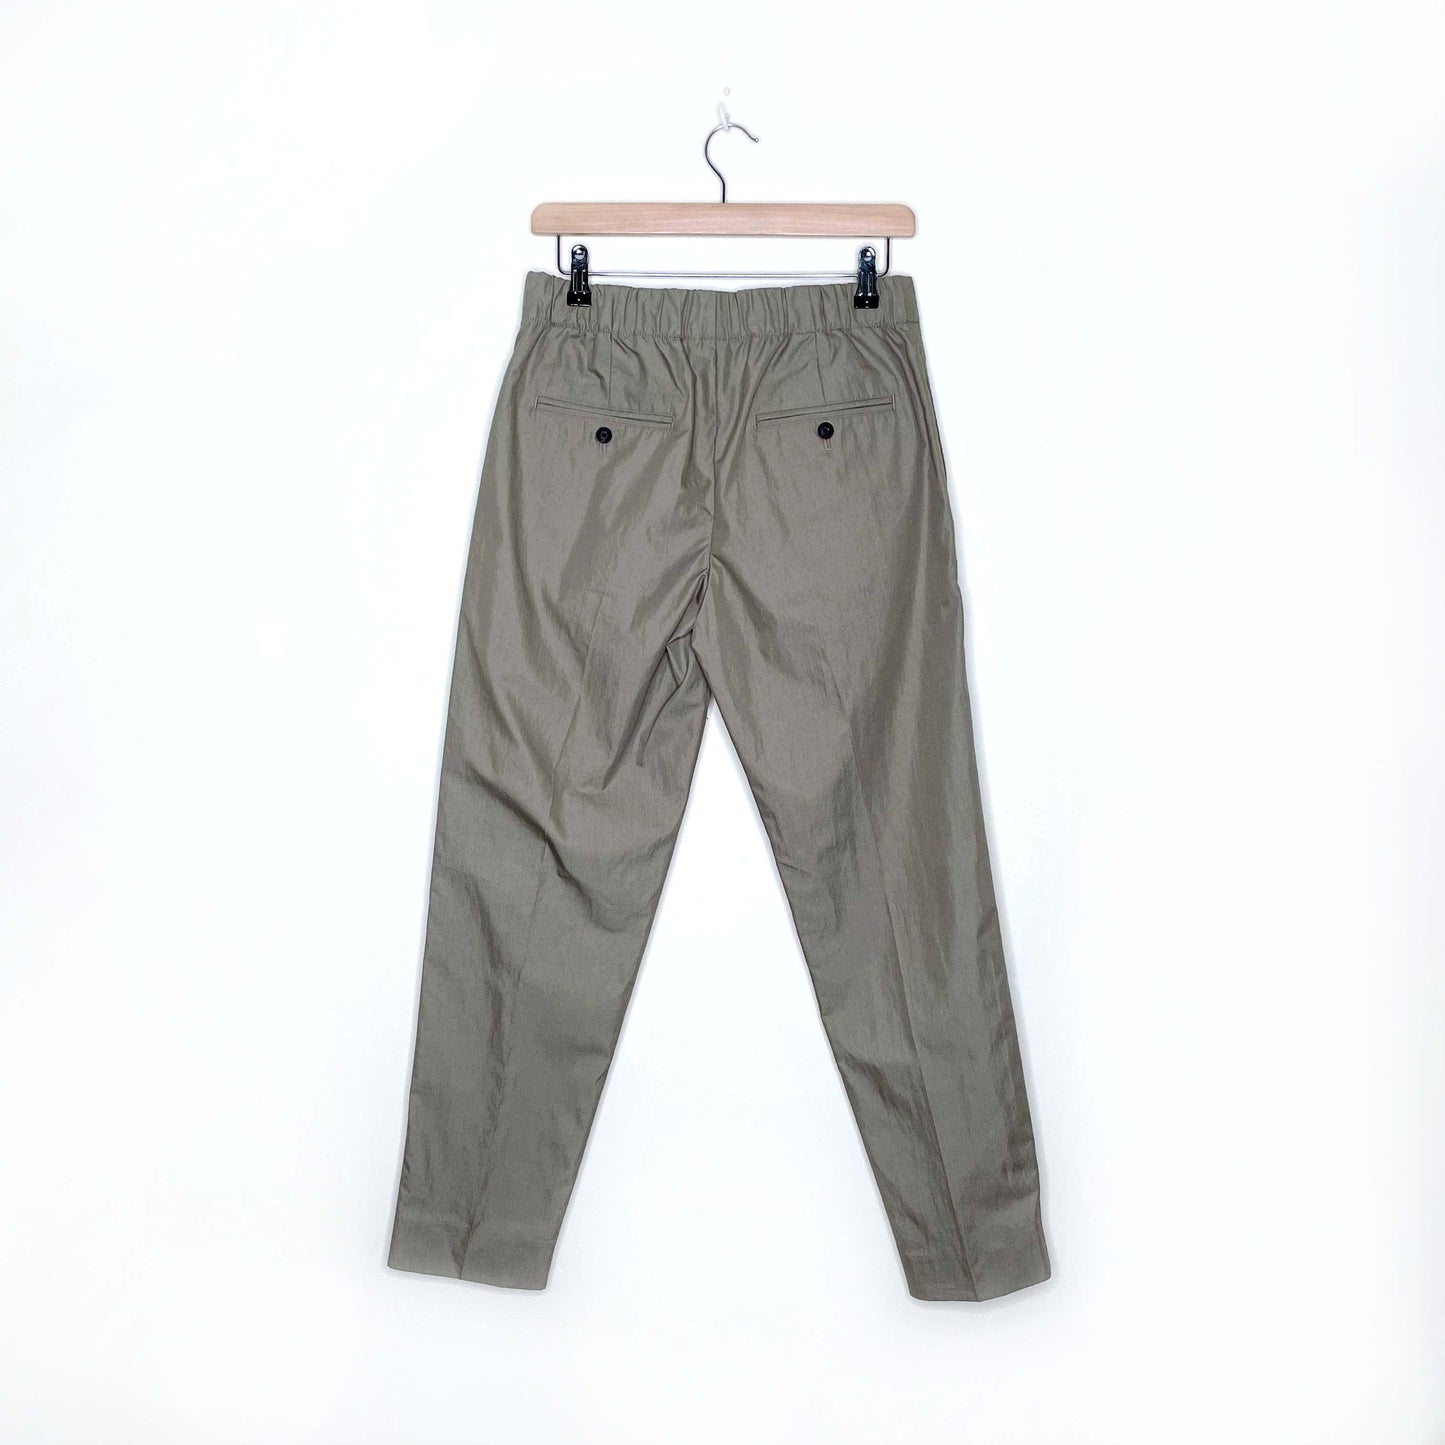 club monaco men's elasticated trouser pants - size small